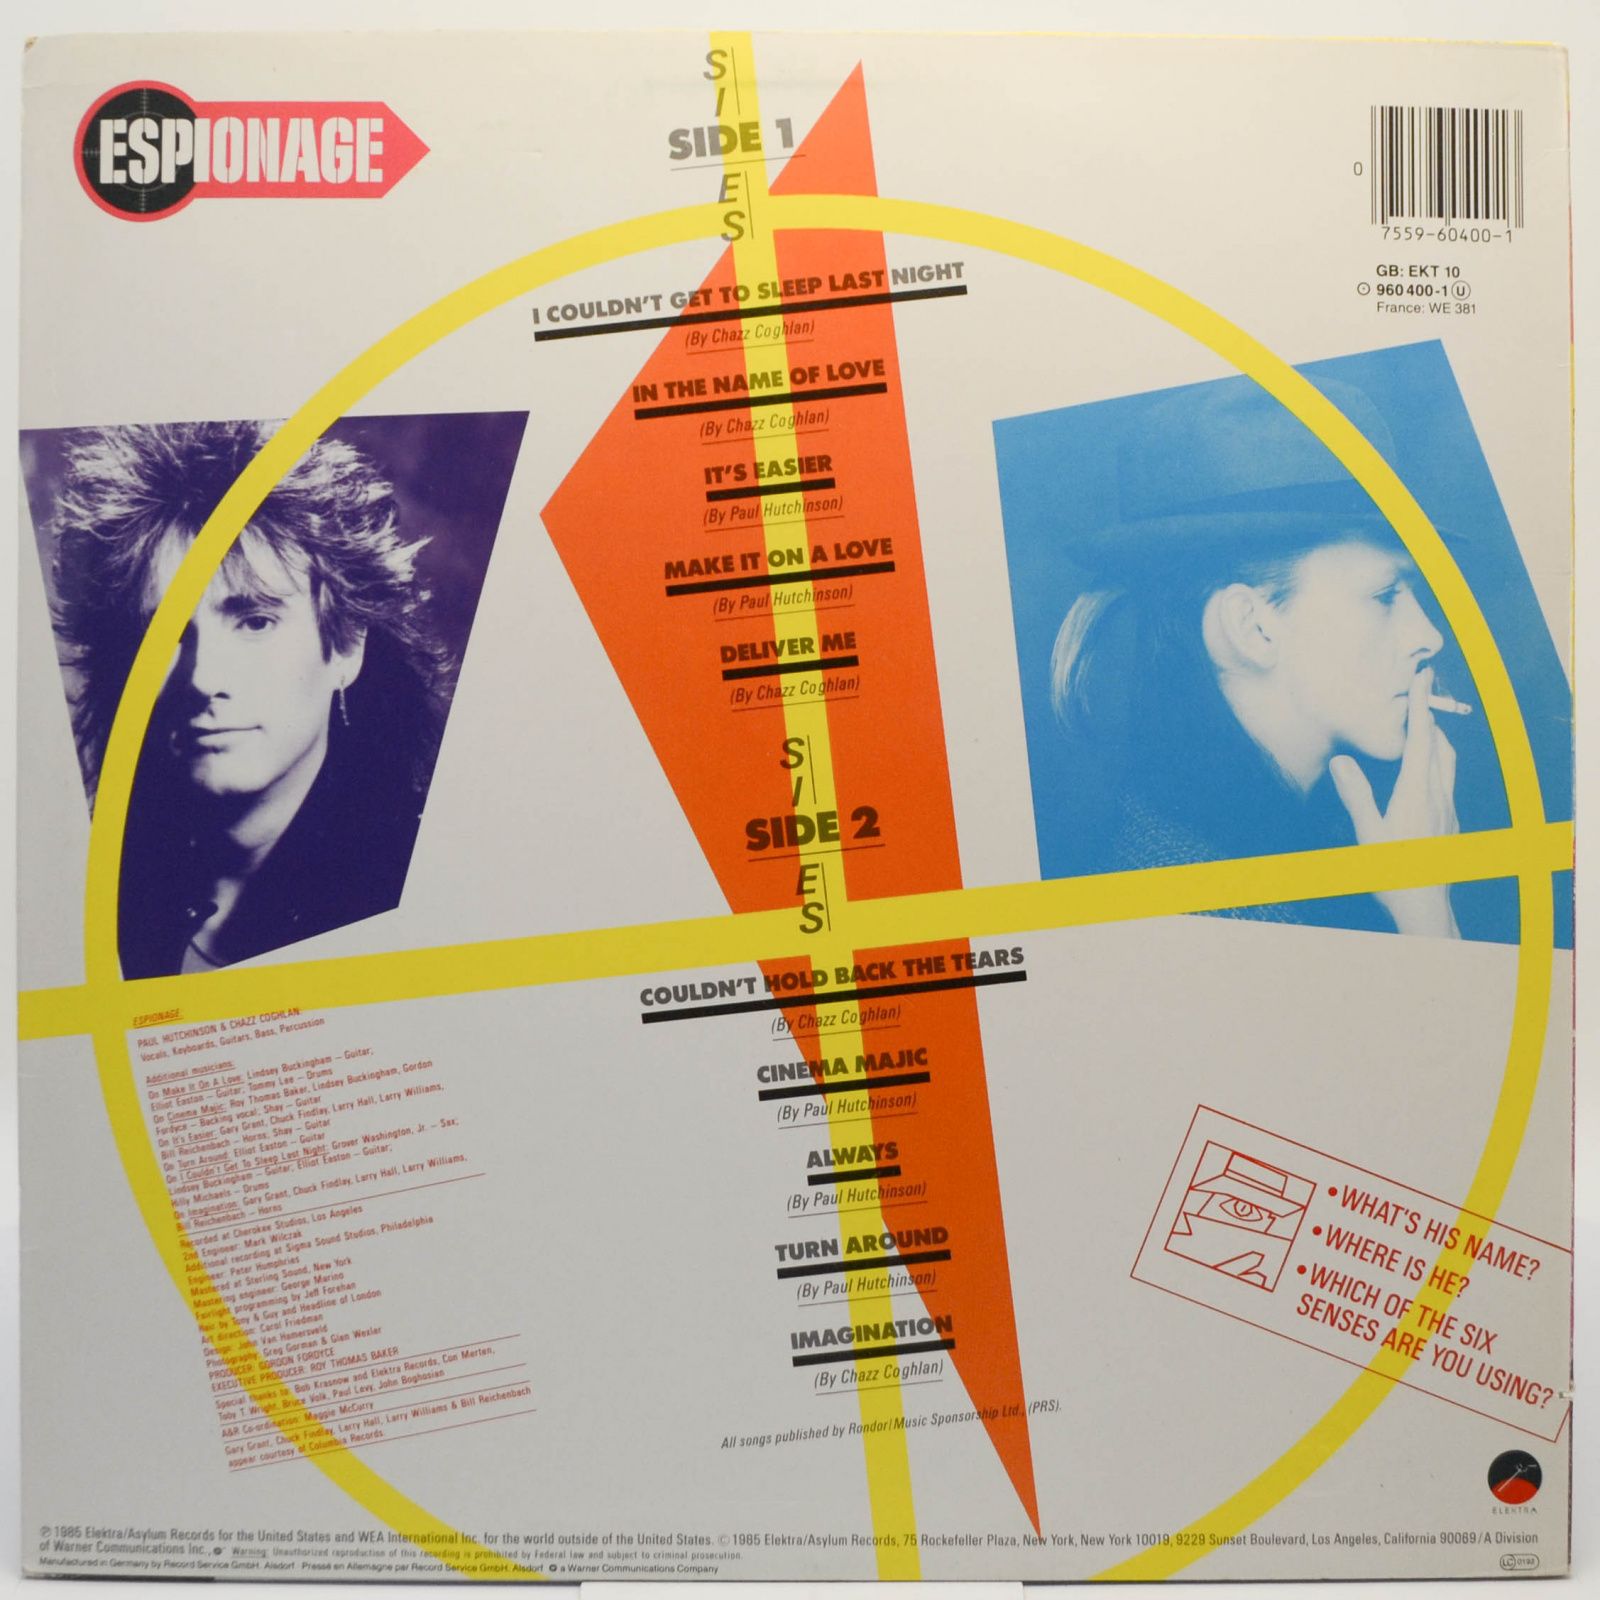 Espionage — E S P, 1985